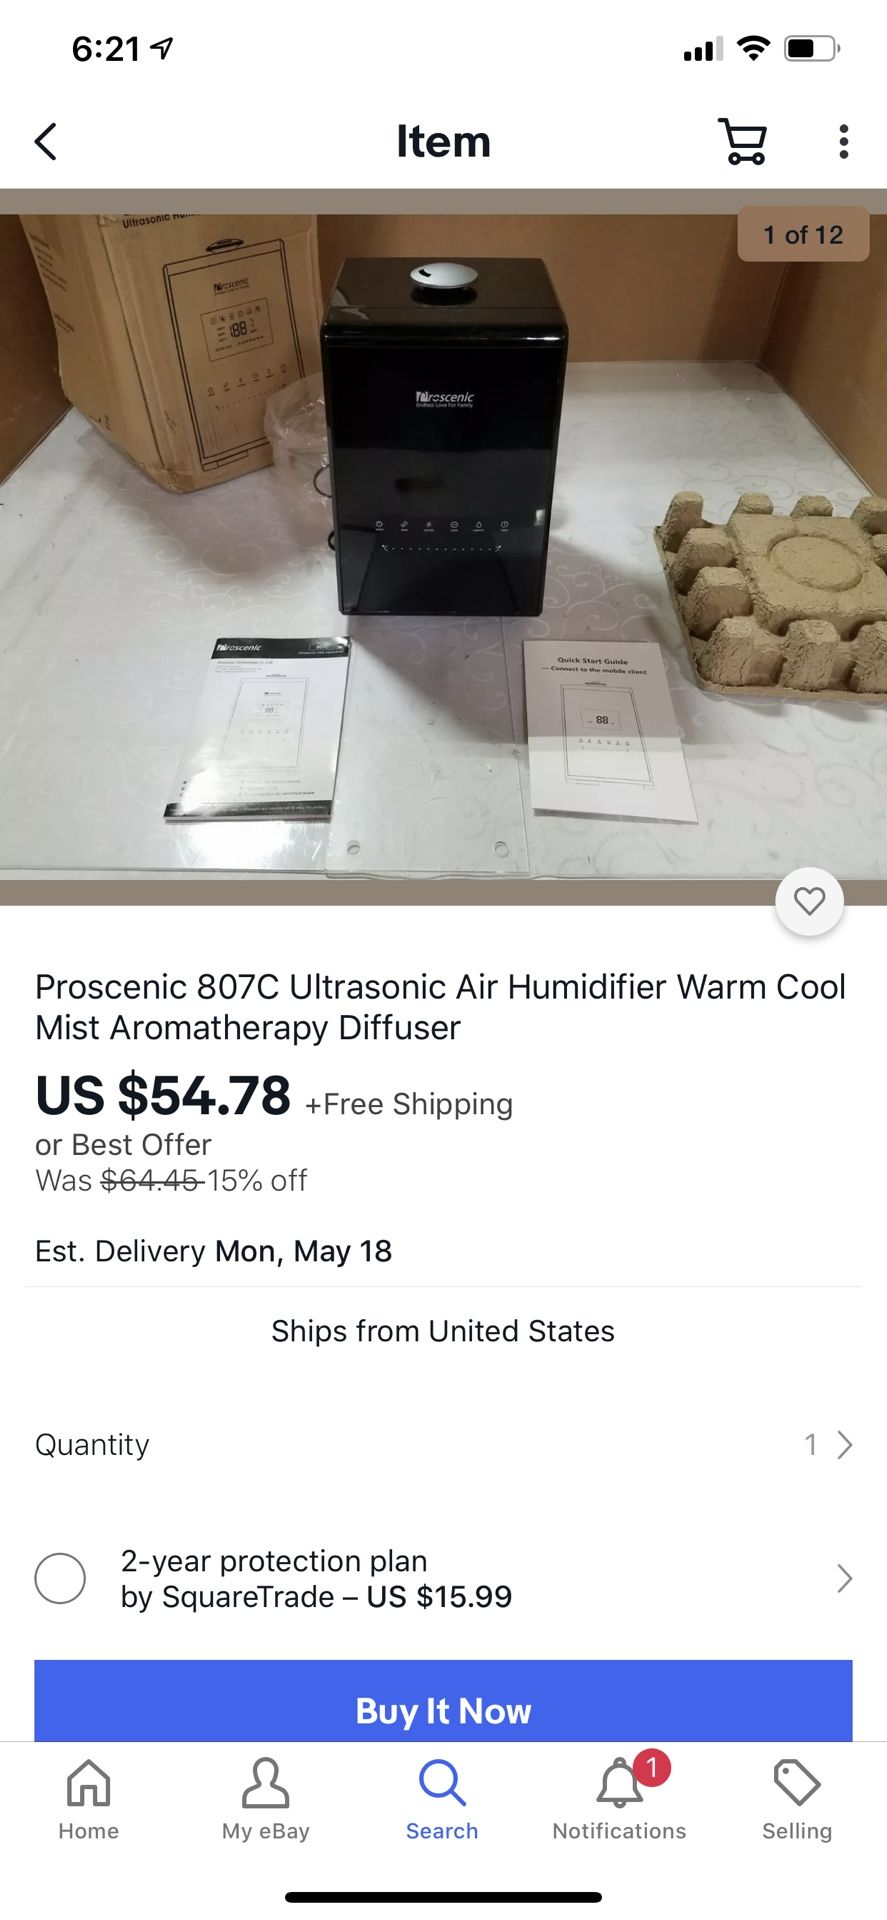 Proscenic 807C Ultrasonic Air Humidifier Warm Cool Mist Aromatherapy Diffuser